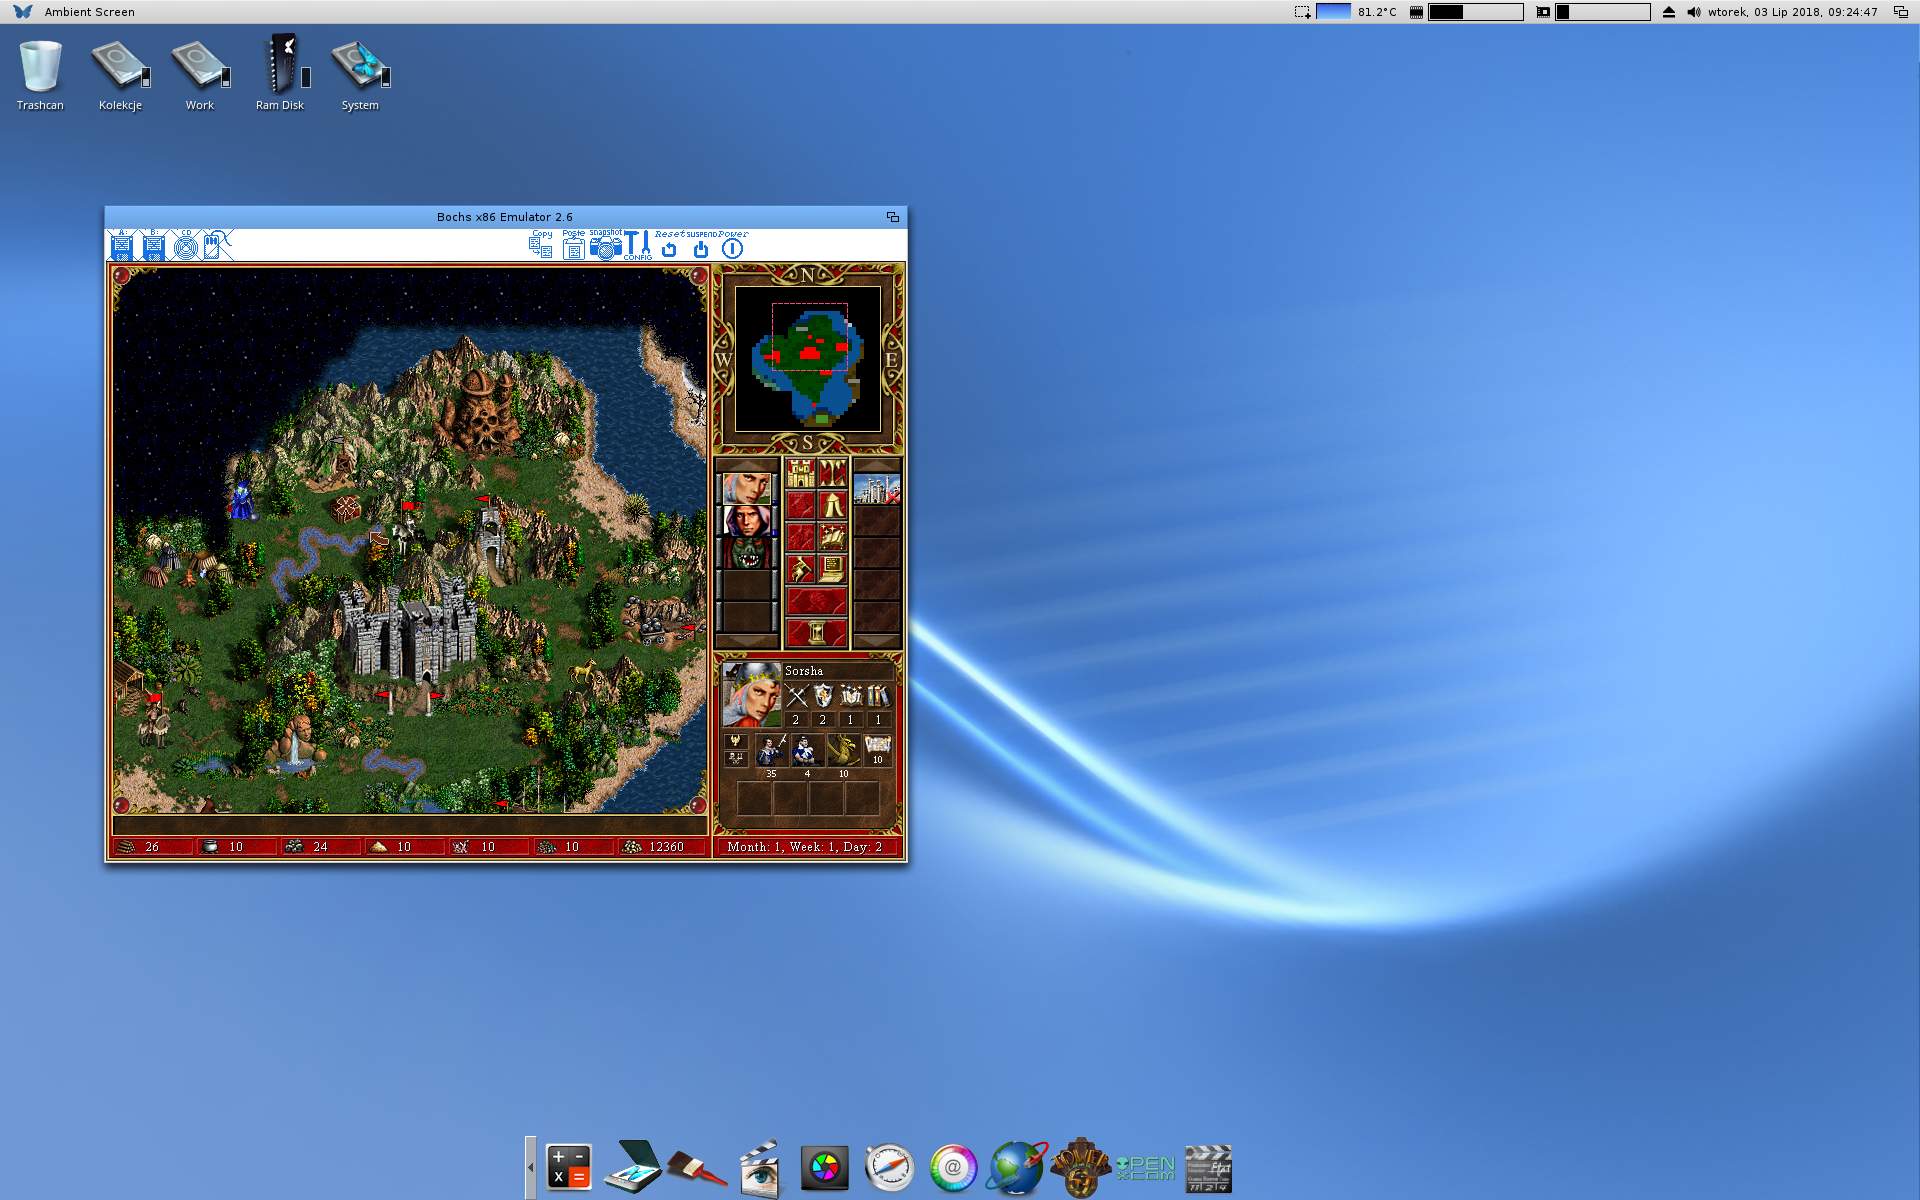 Emulator Bochs 2.6 i Heroes of Might and Magic III